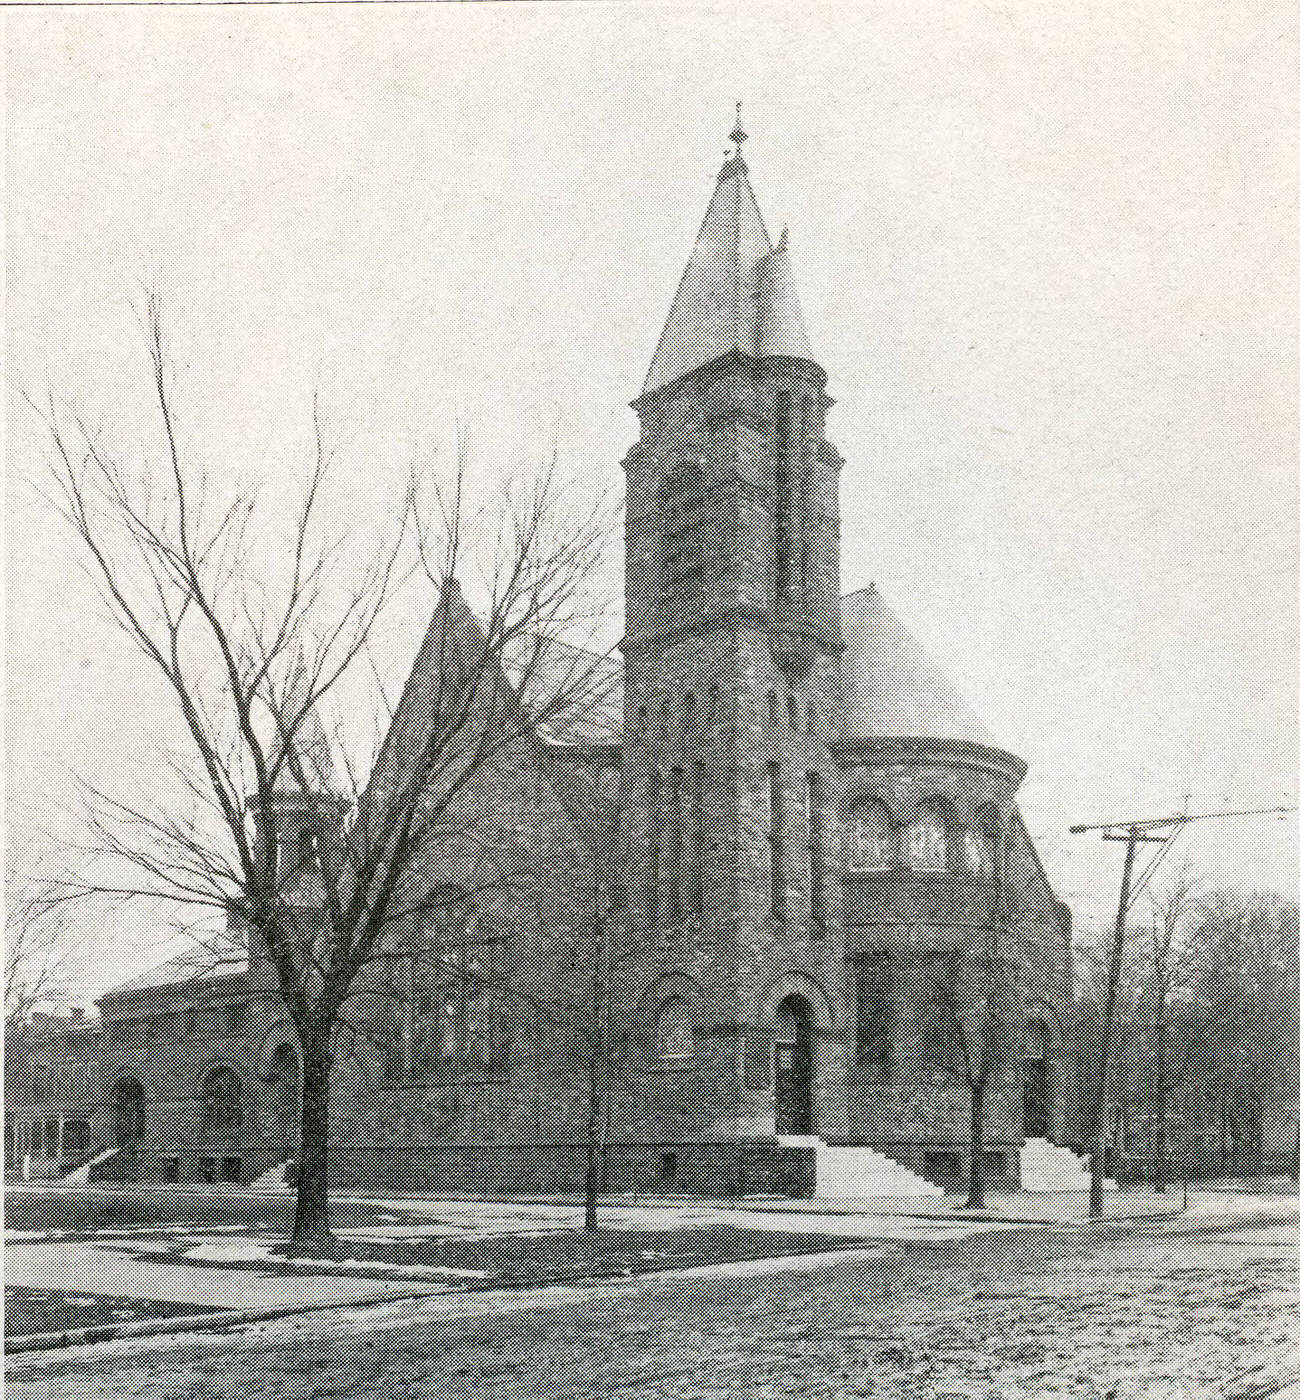 Broad Street Presbyterian Church, exterior view, 1915